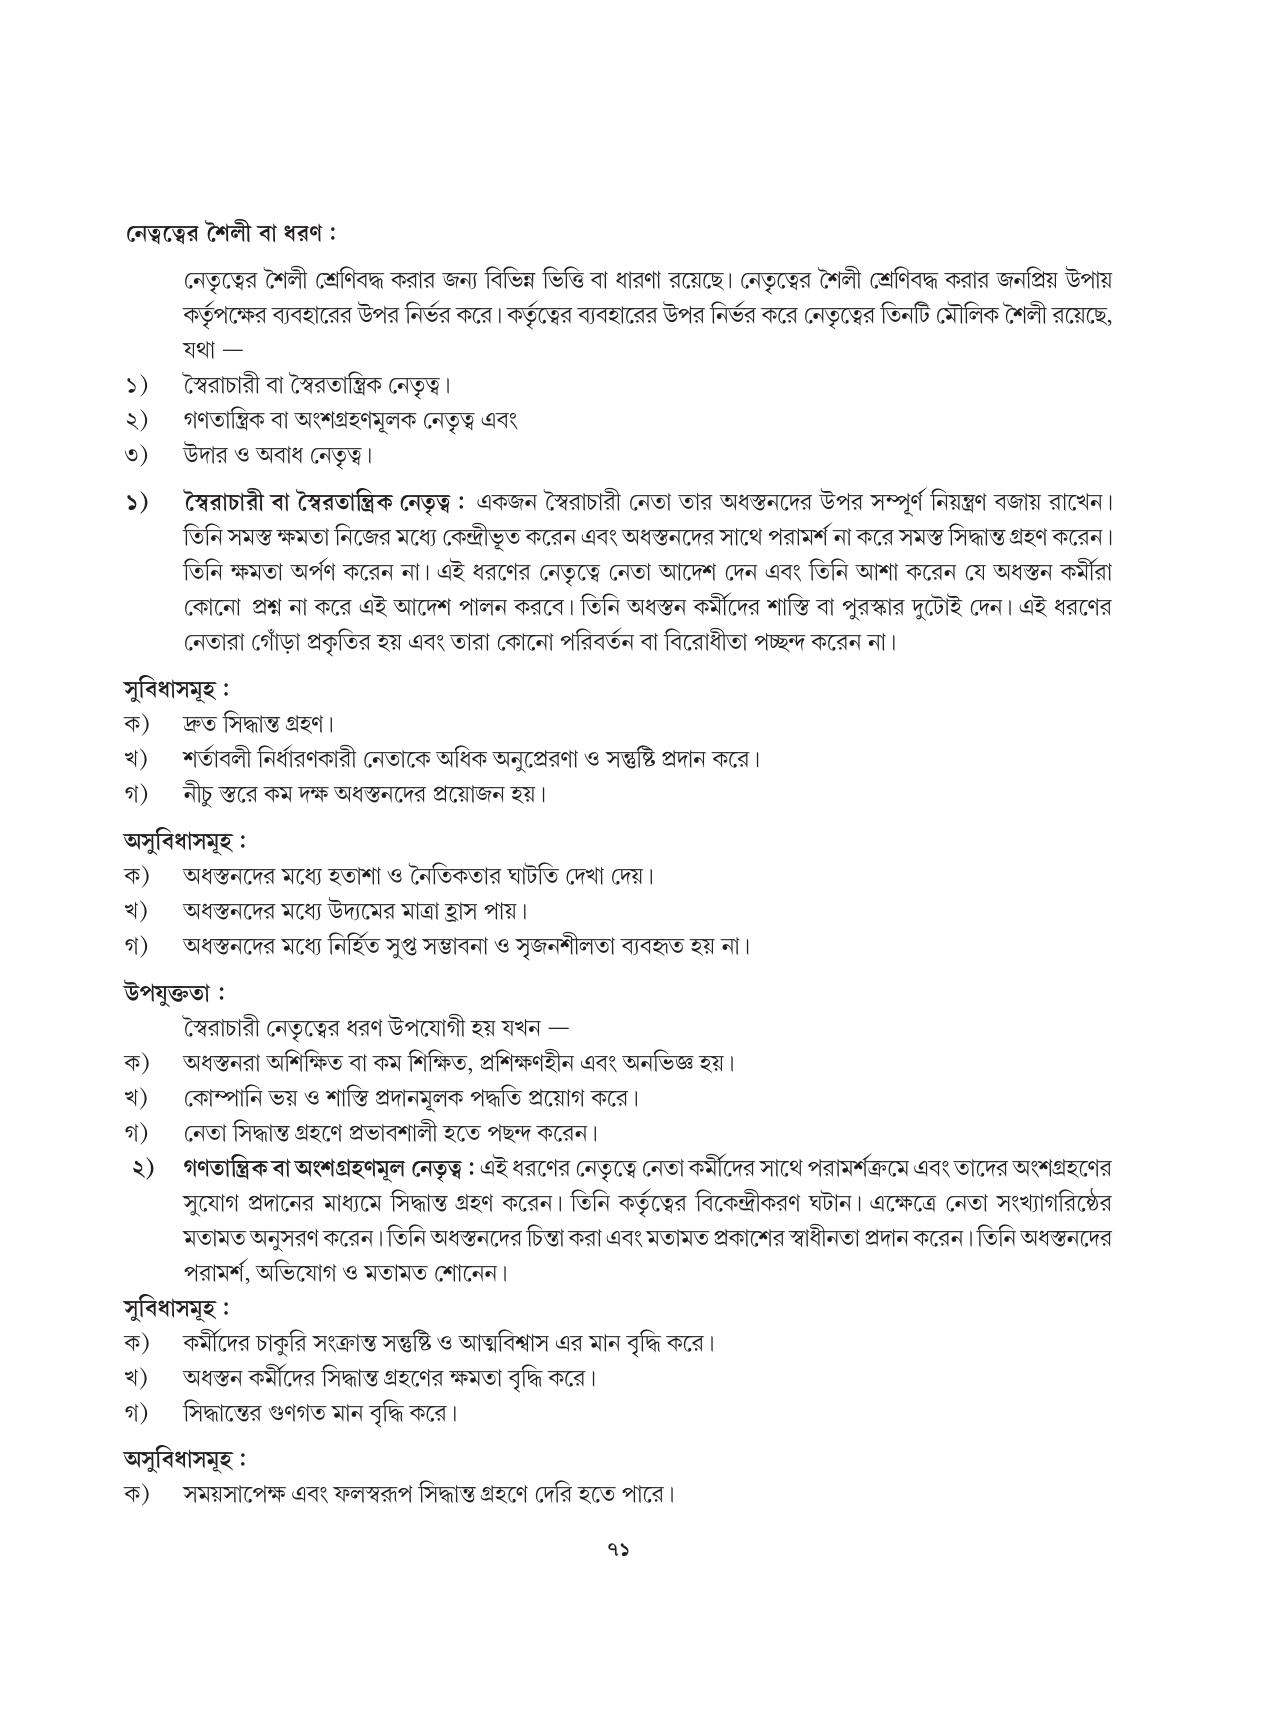 Tripura Board Class 12 Karbari Shastra Bengali Version Workbooks - Page 71